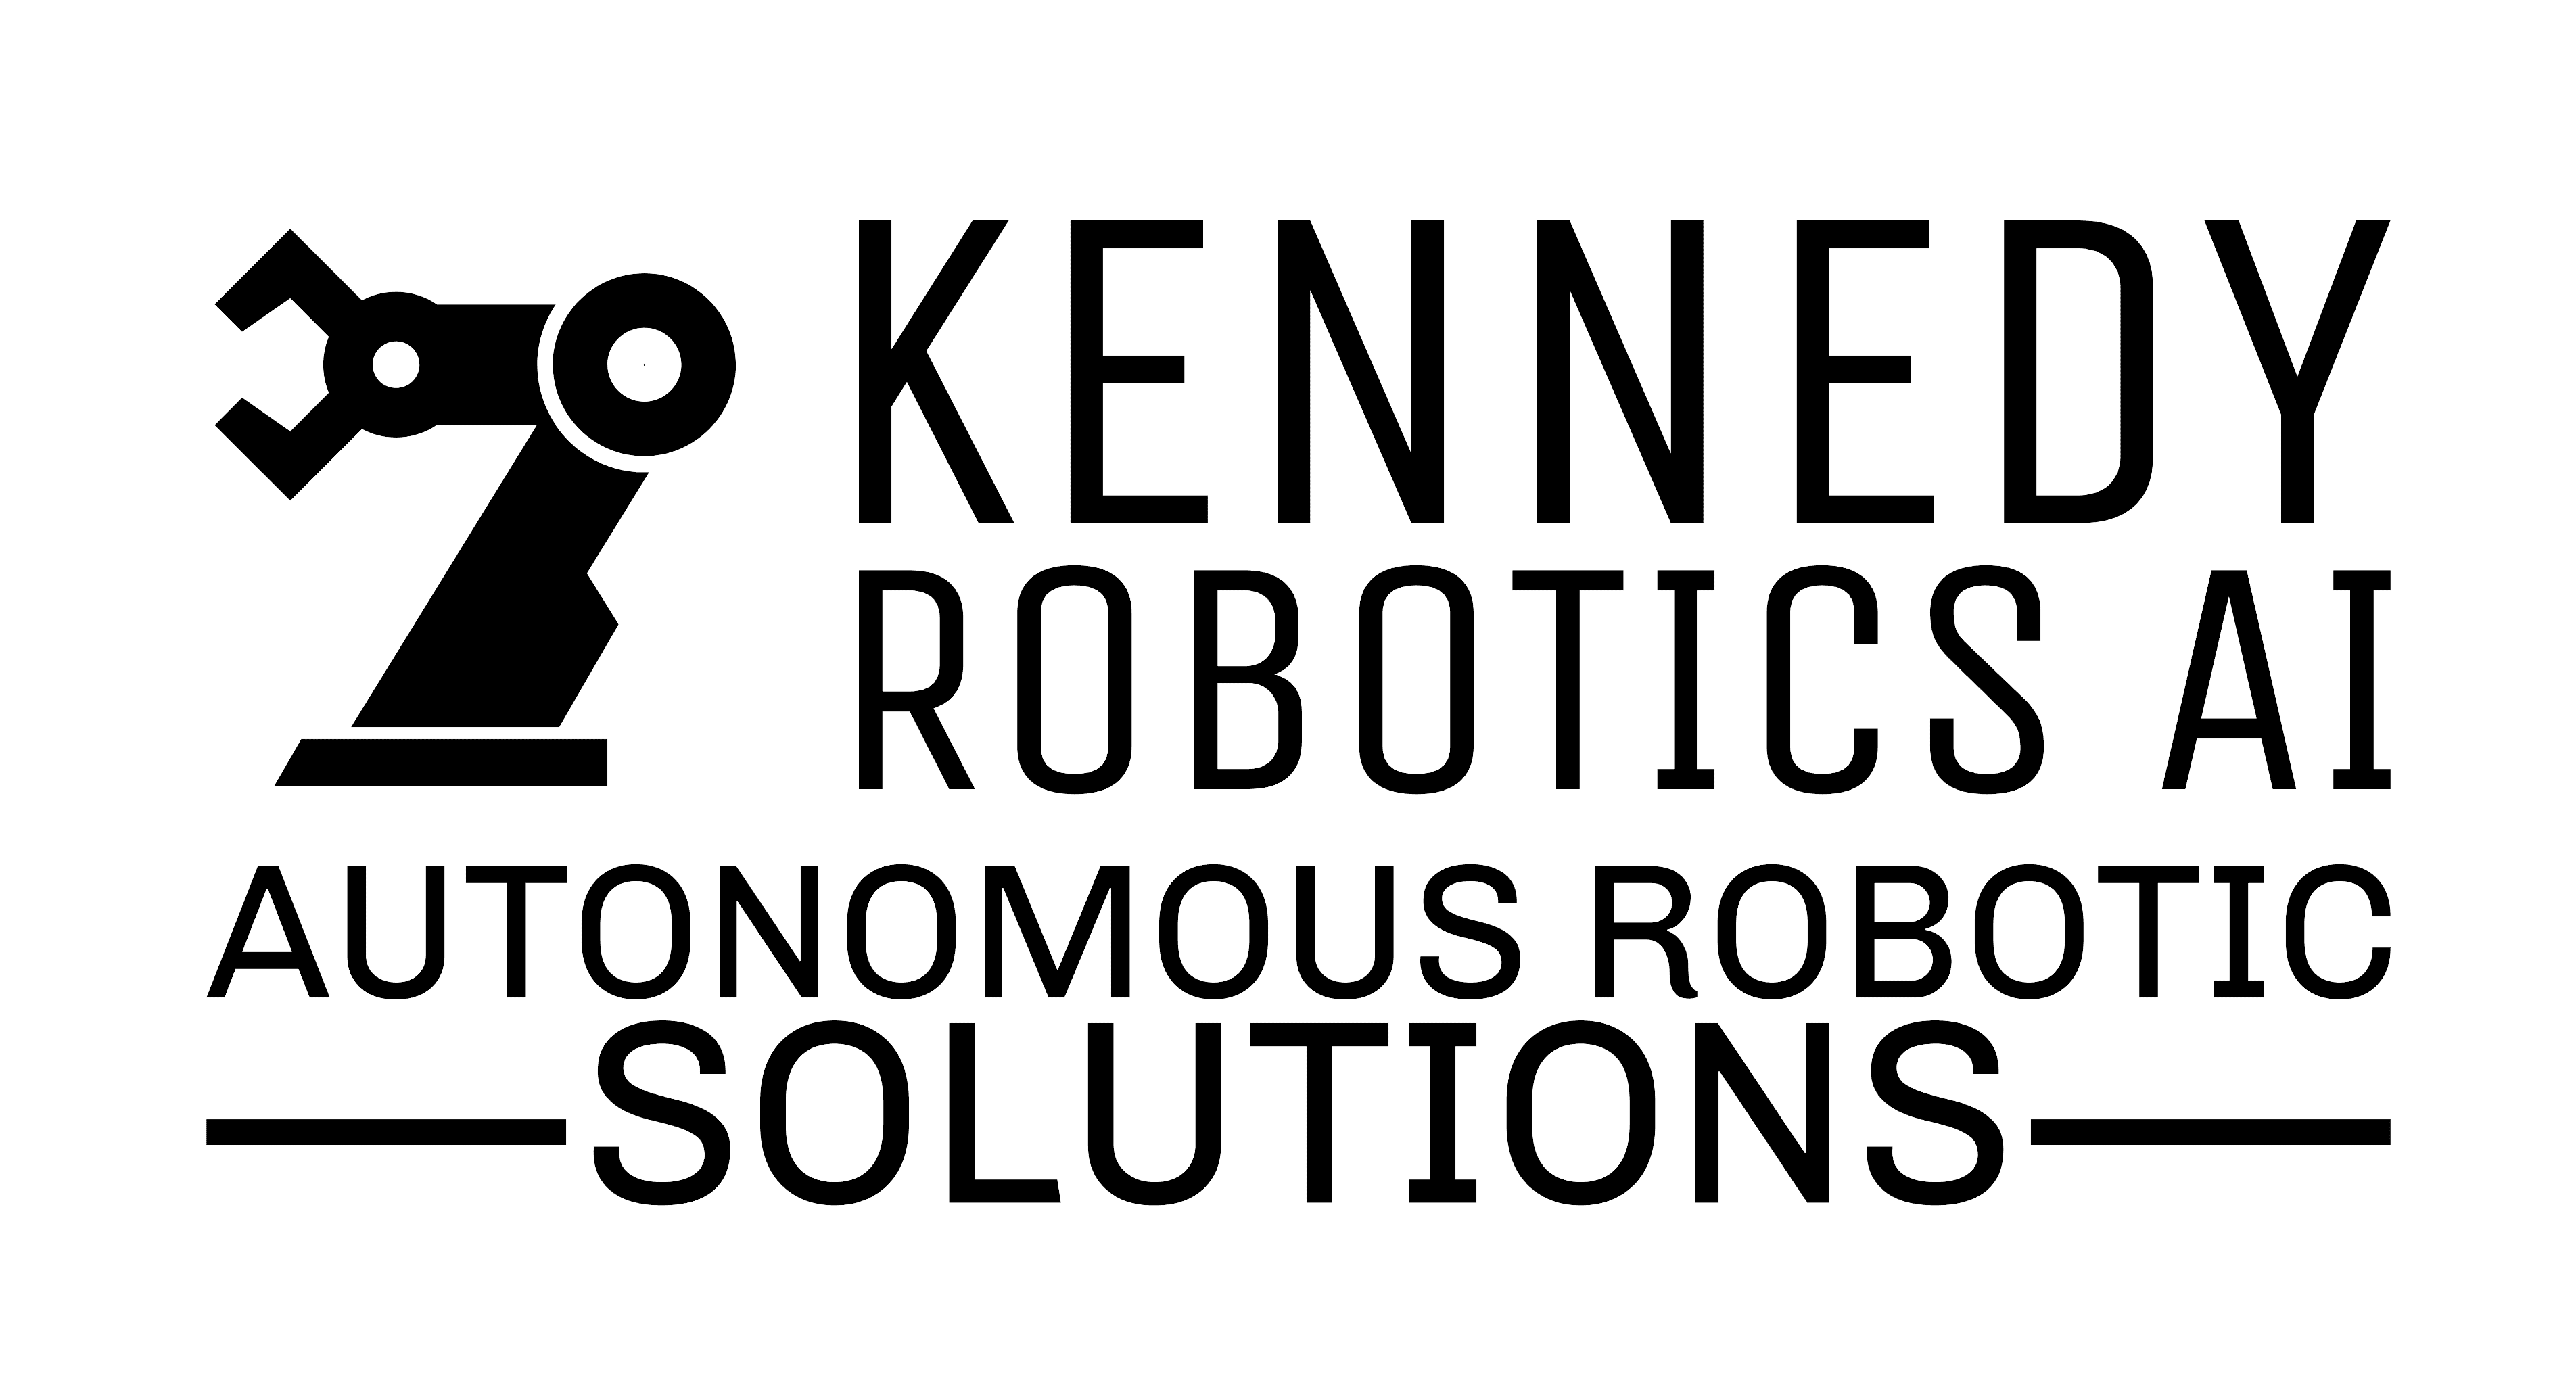 KENNEDY ROBOTICS AI AUTONOMOUS ROBOTIC SOLUTIONS